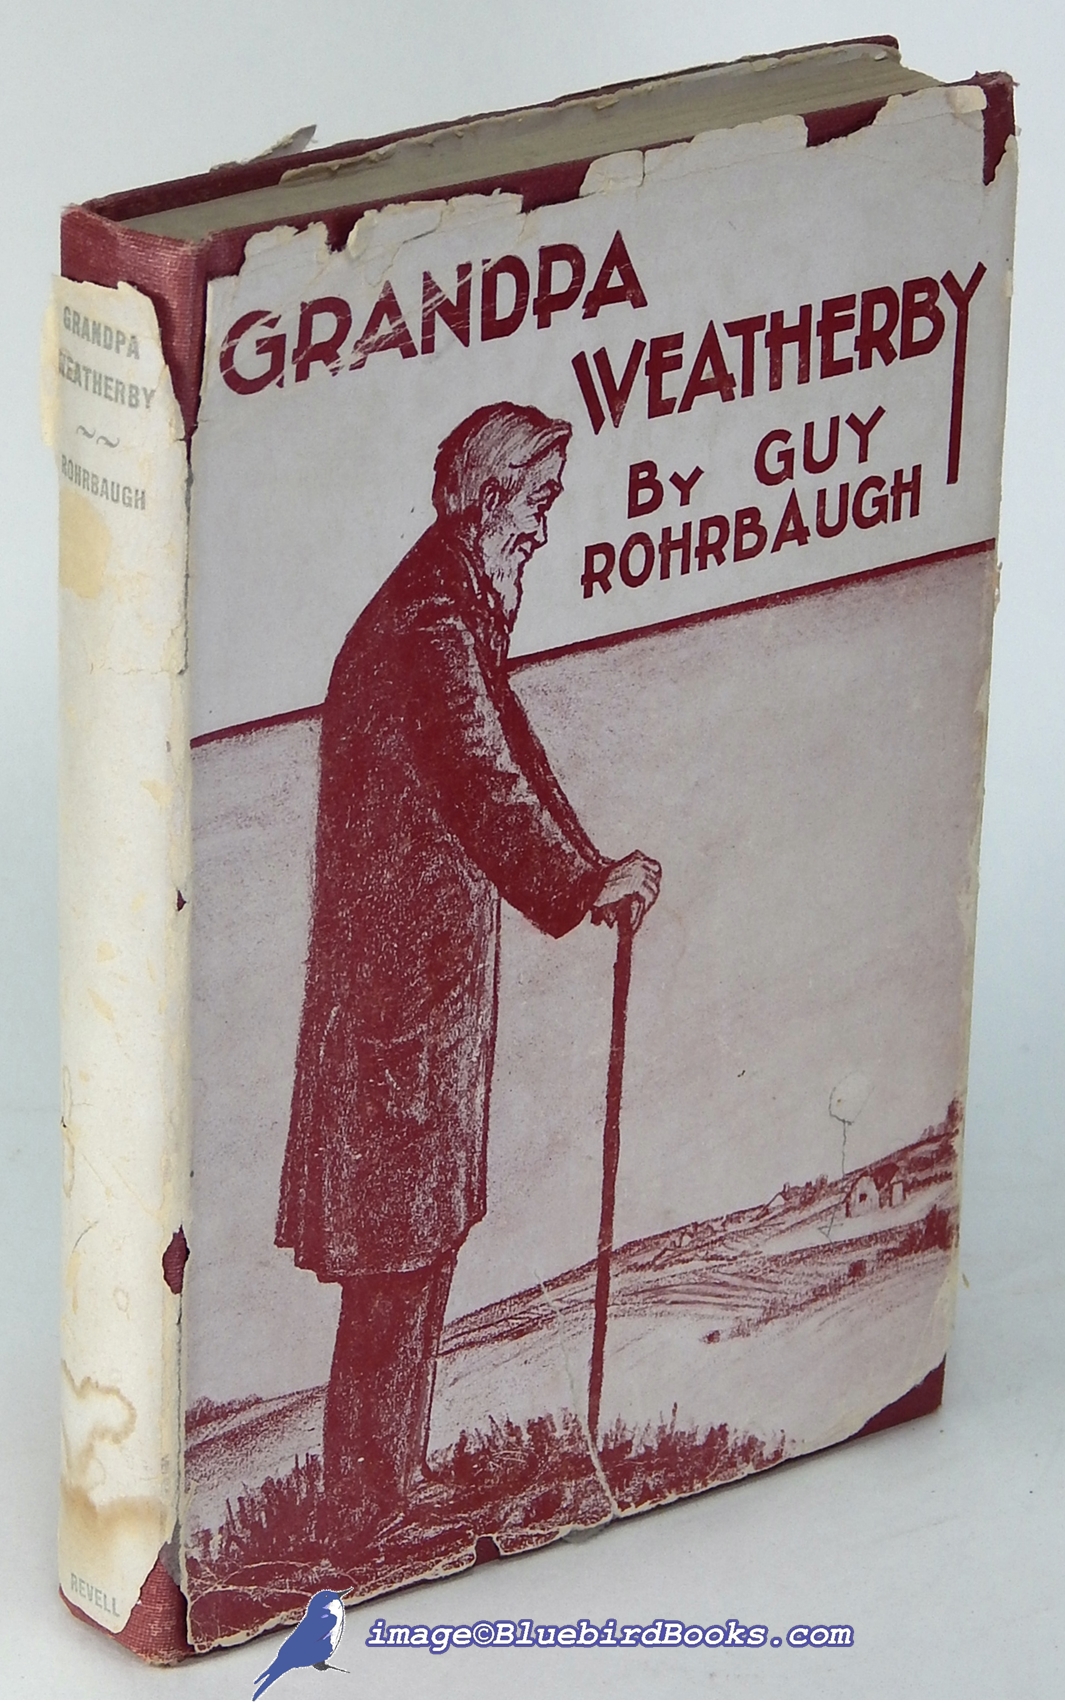 ROHRBAUGH, GUY - Grandpa Weatherby